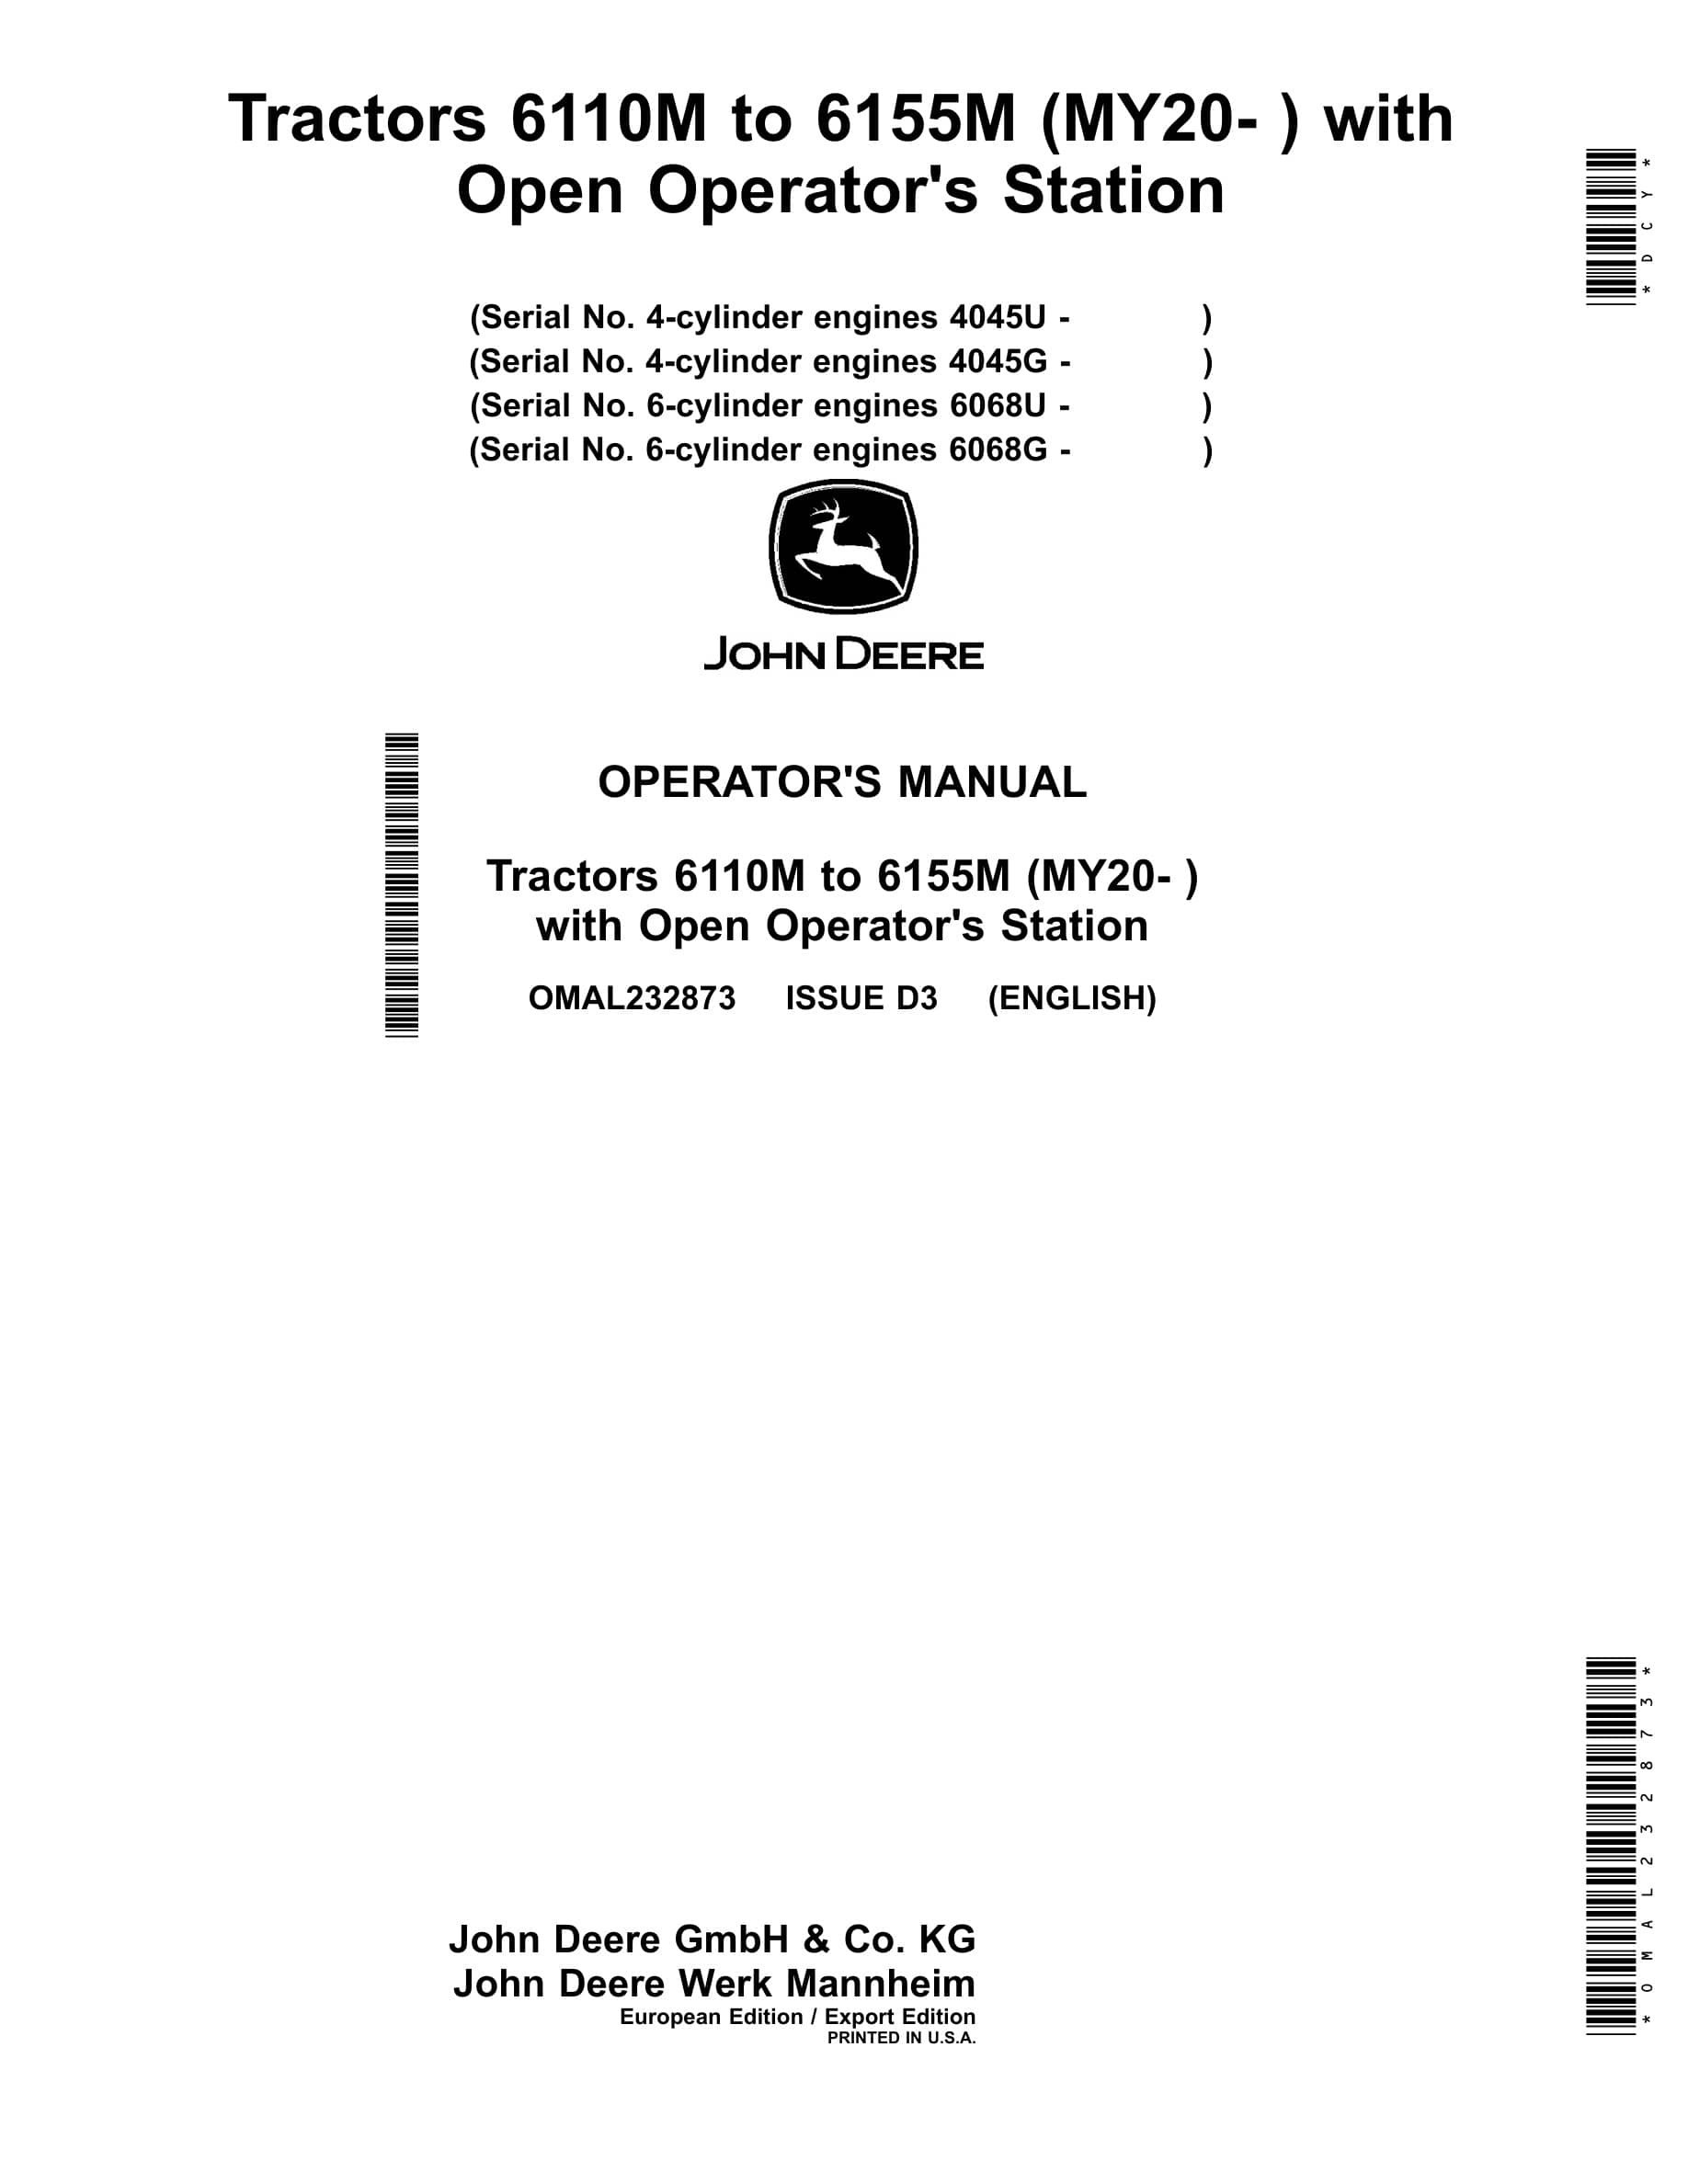 John Deere 6110m To 6155m (my20- ) Tractors Operator Manuals OMAL232873-1